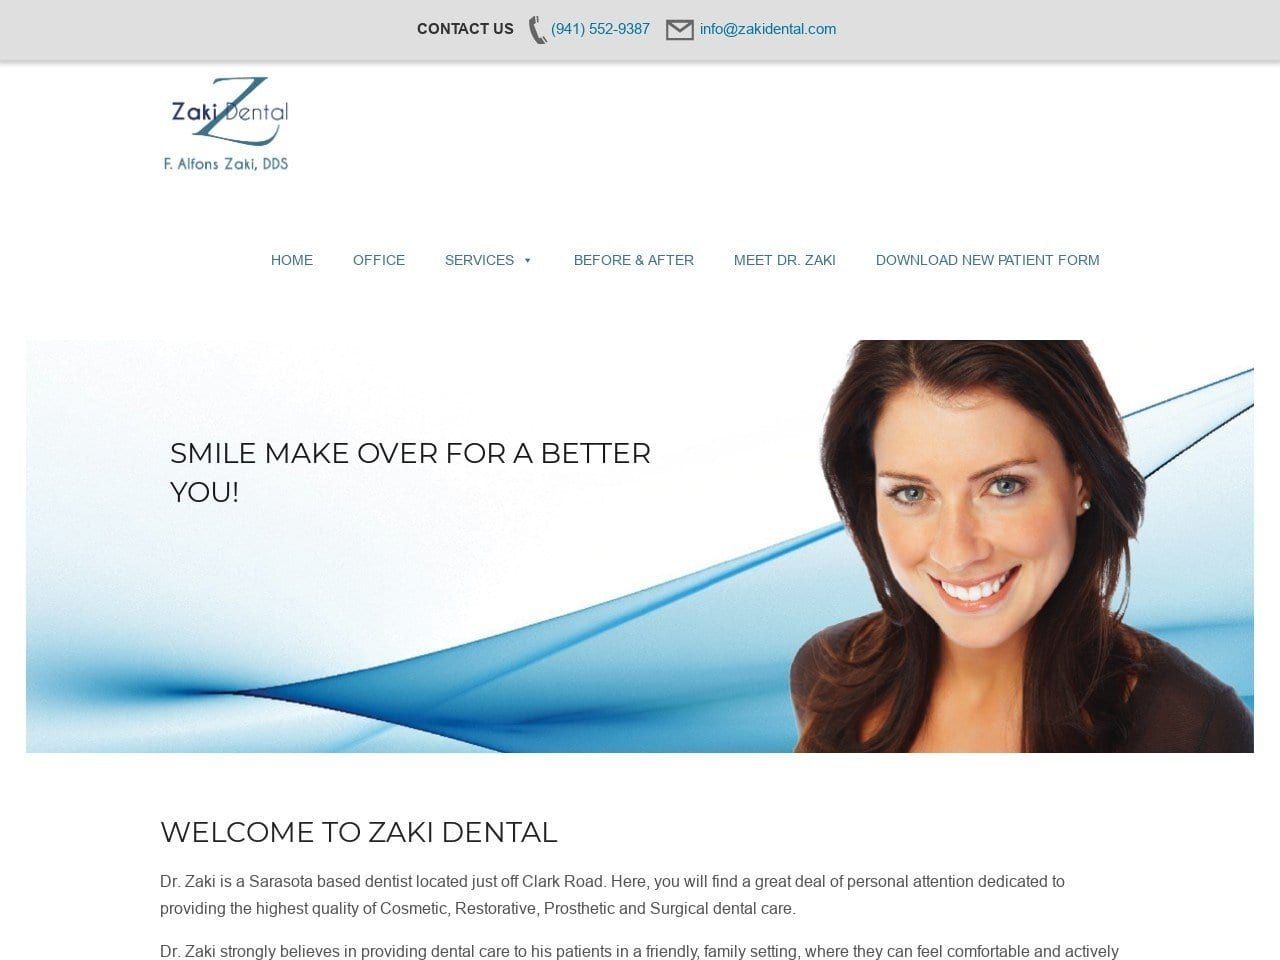 Dr. F. ALFONS ZAKI Website Screenshot from zakidental.com